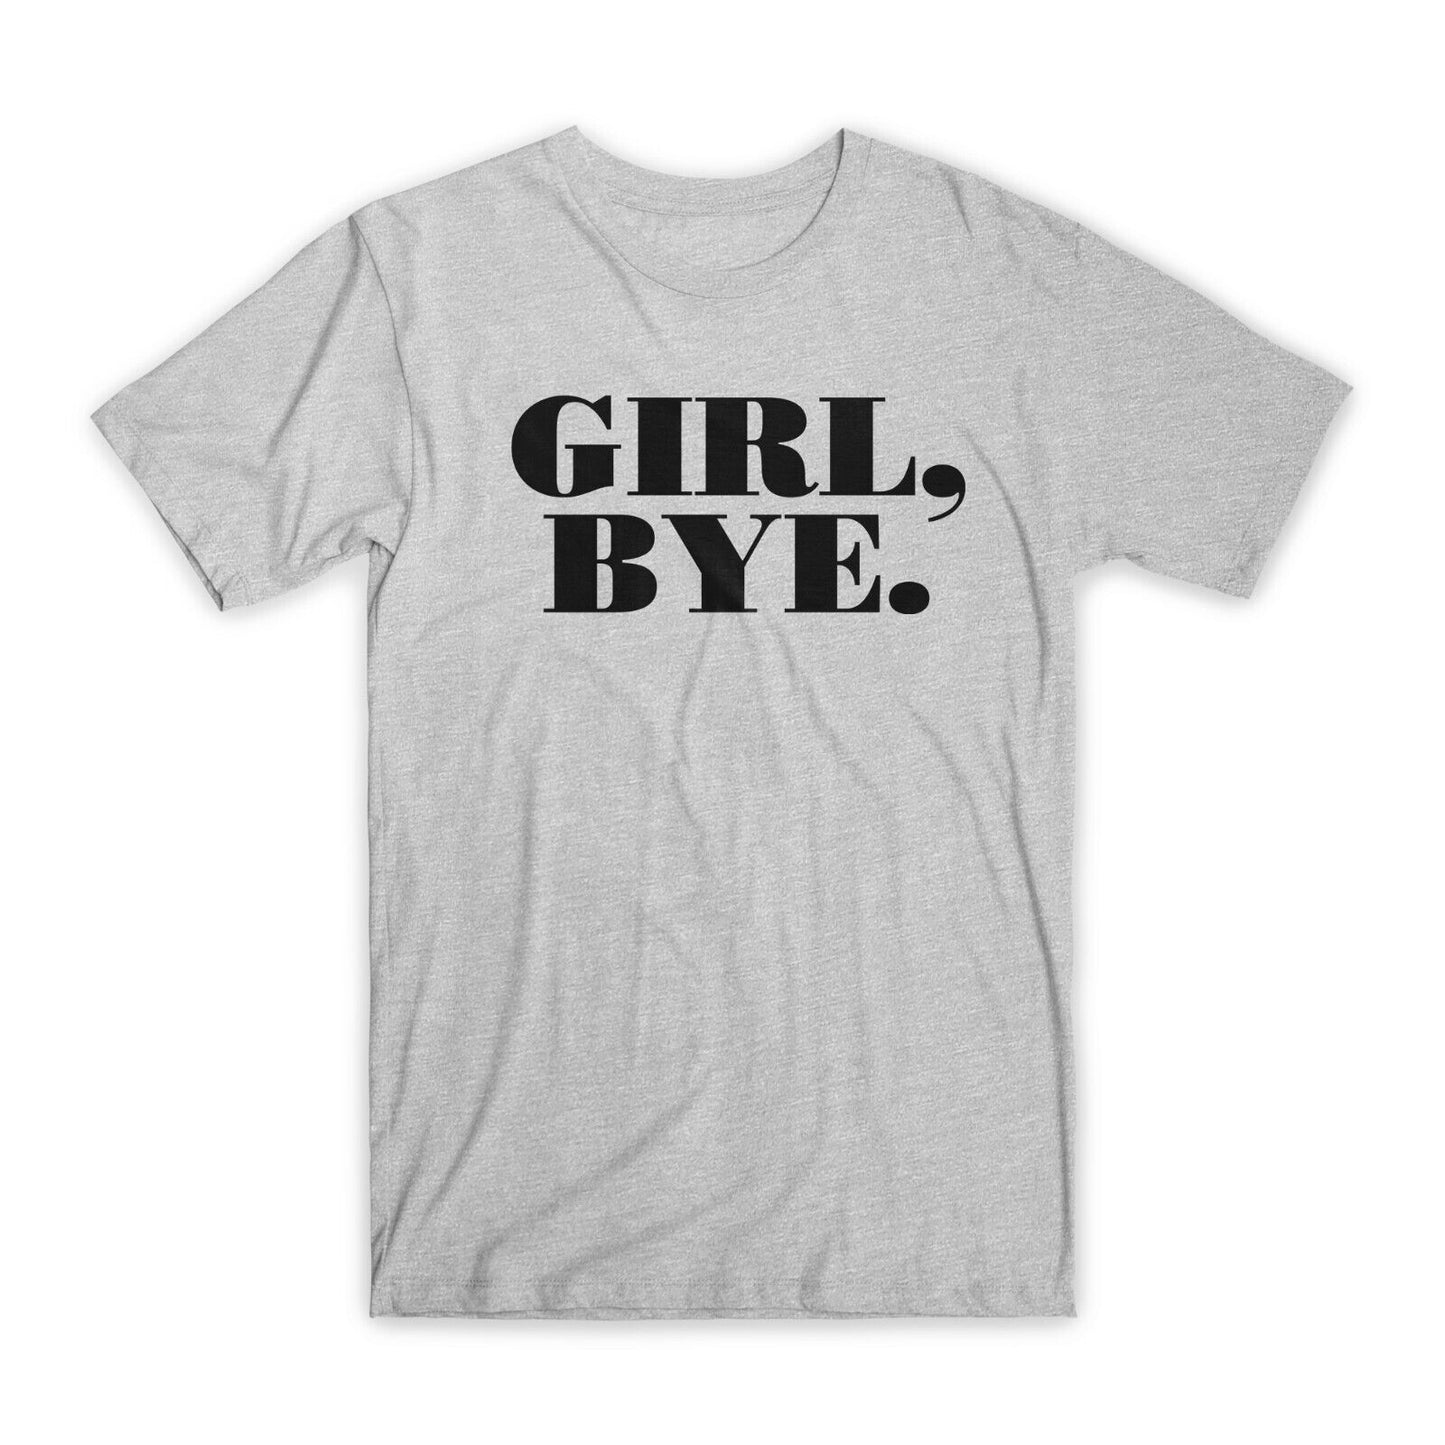 Girl, Bye Print T-Shirt Premium Soft Cotton Crew Neck Funny Tee Novelty Gift NEW